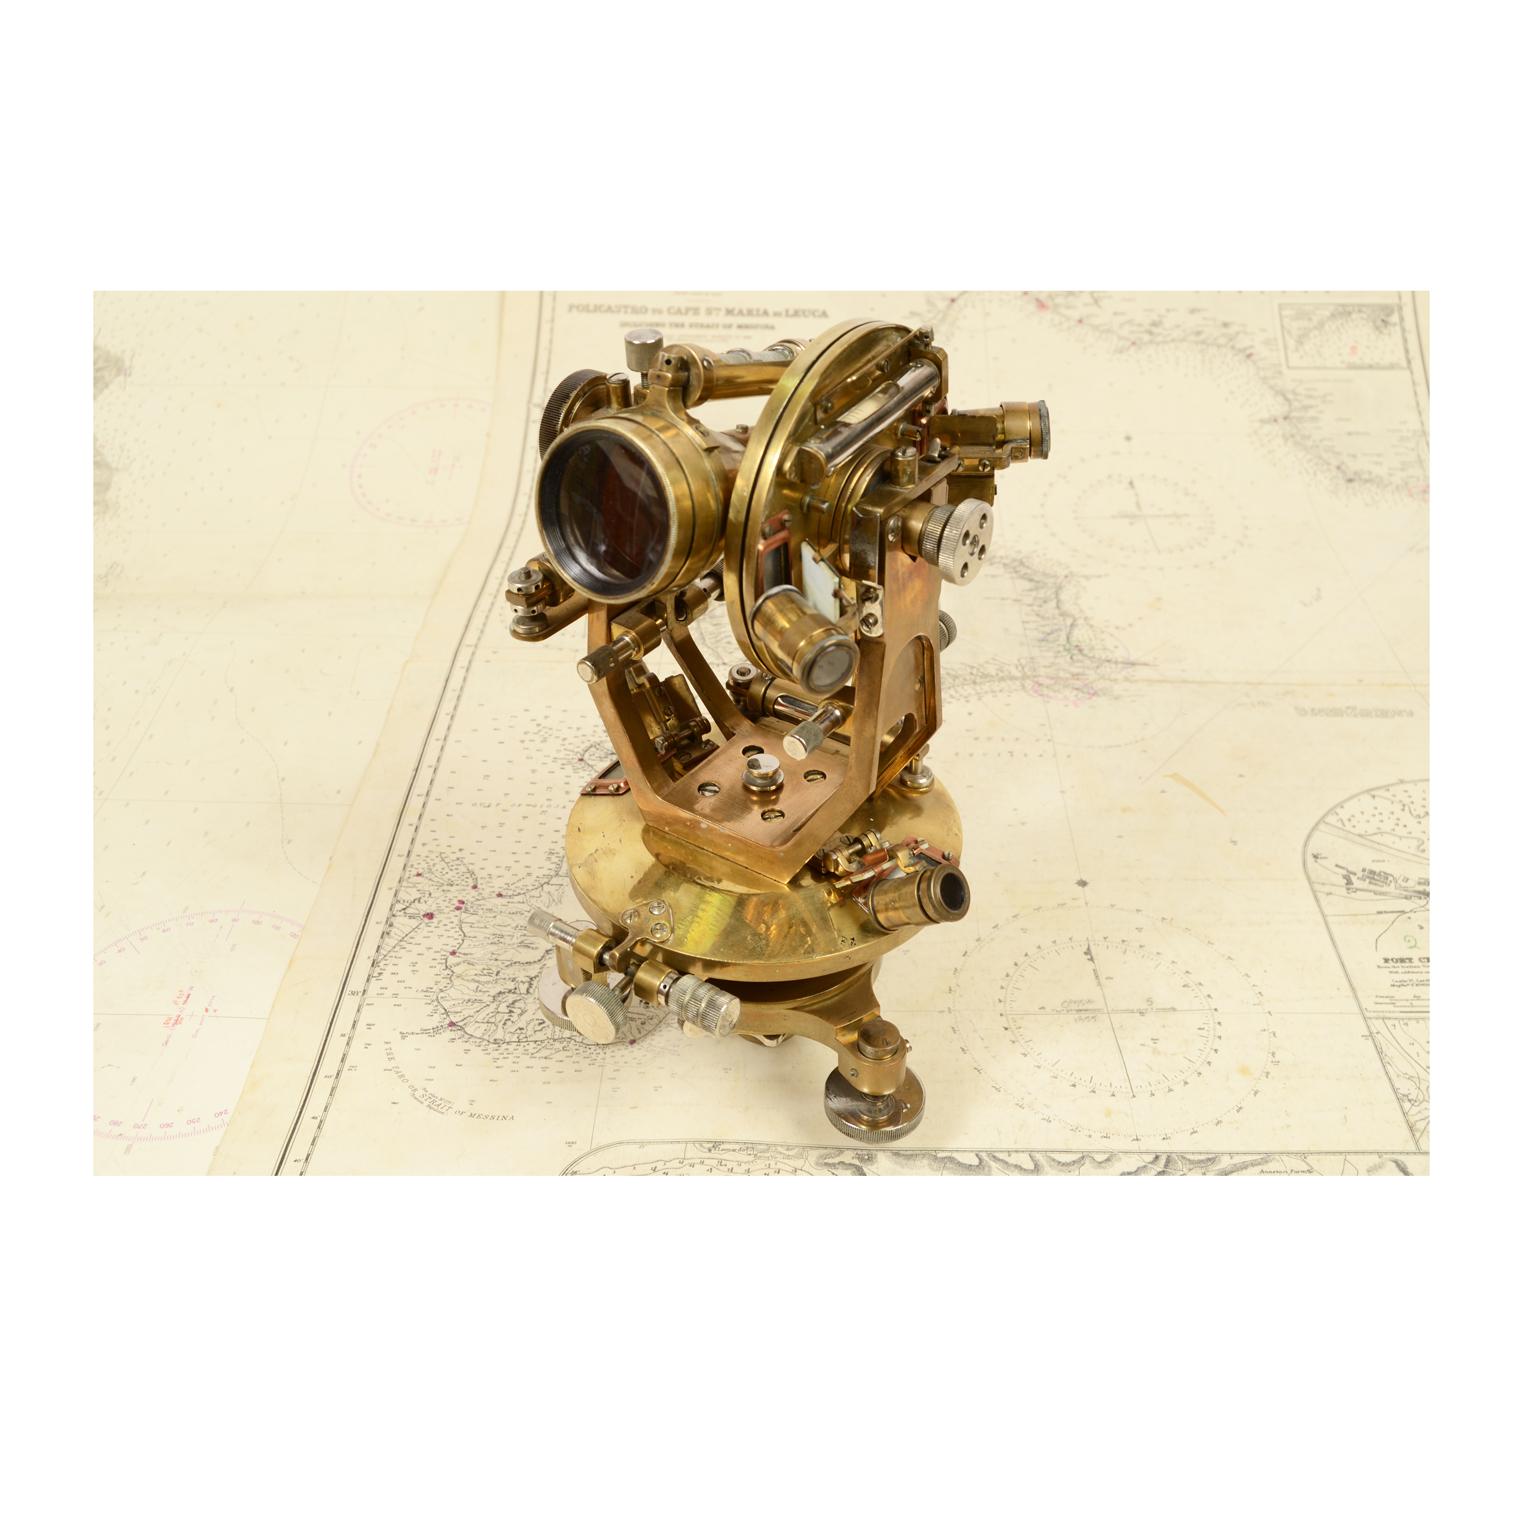 British 1900s English Antique Brass Tacheometer, surveying instrument